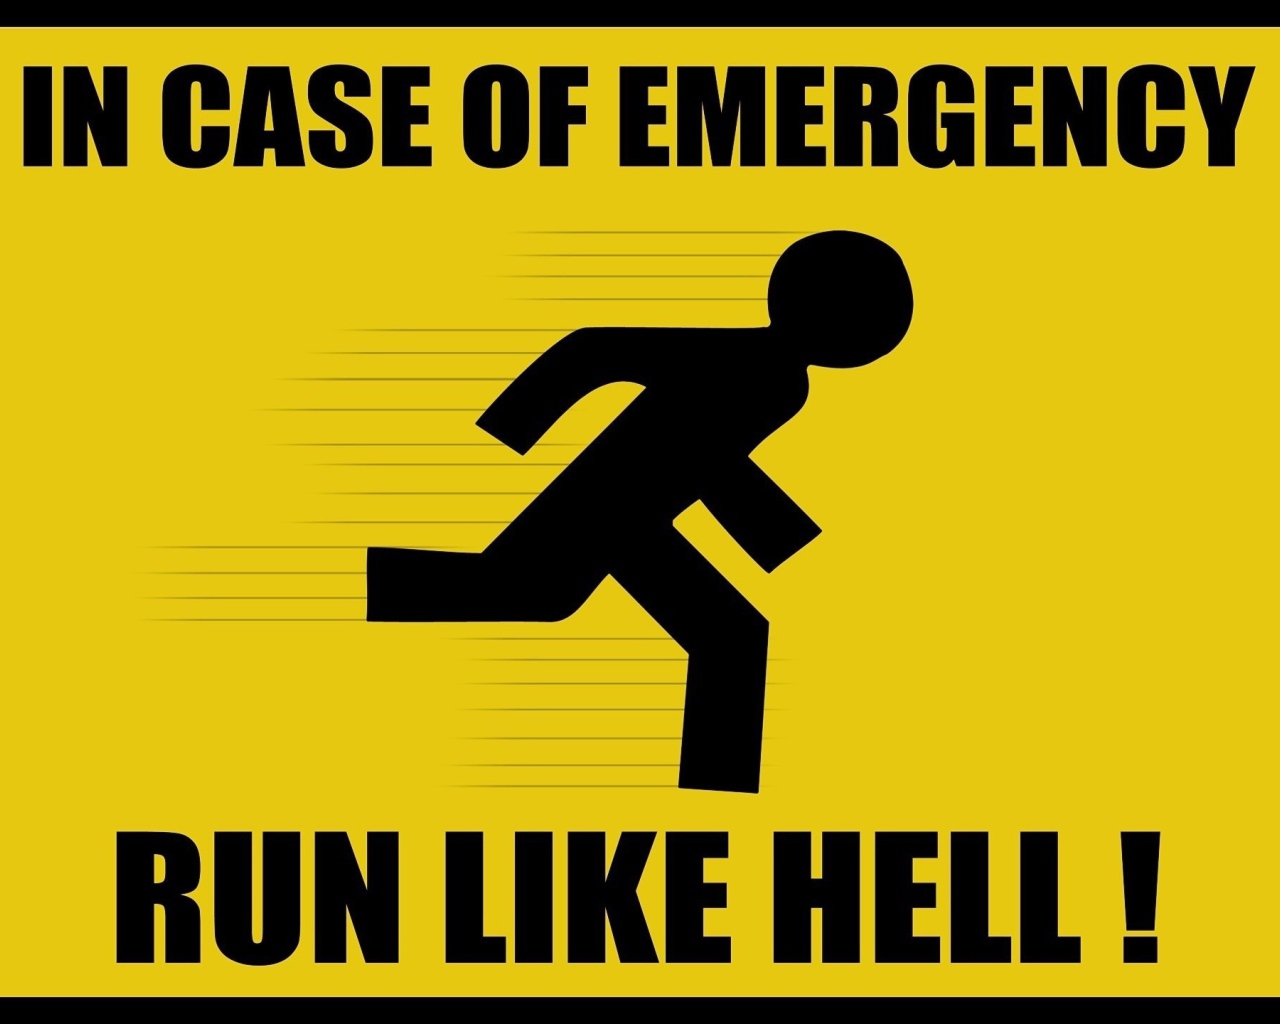 Предупреждение человек. Обои с предупреждением. Global Warning плакат. Running like hell